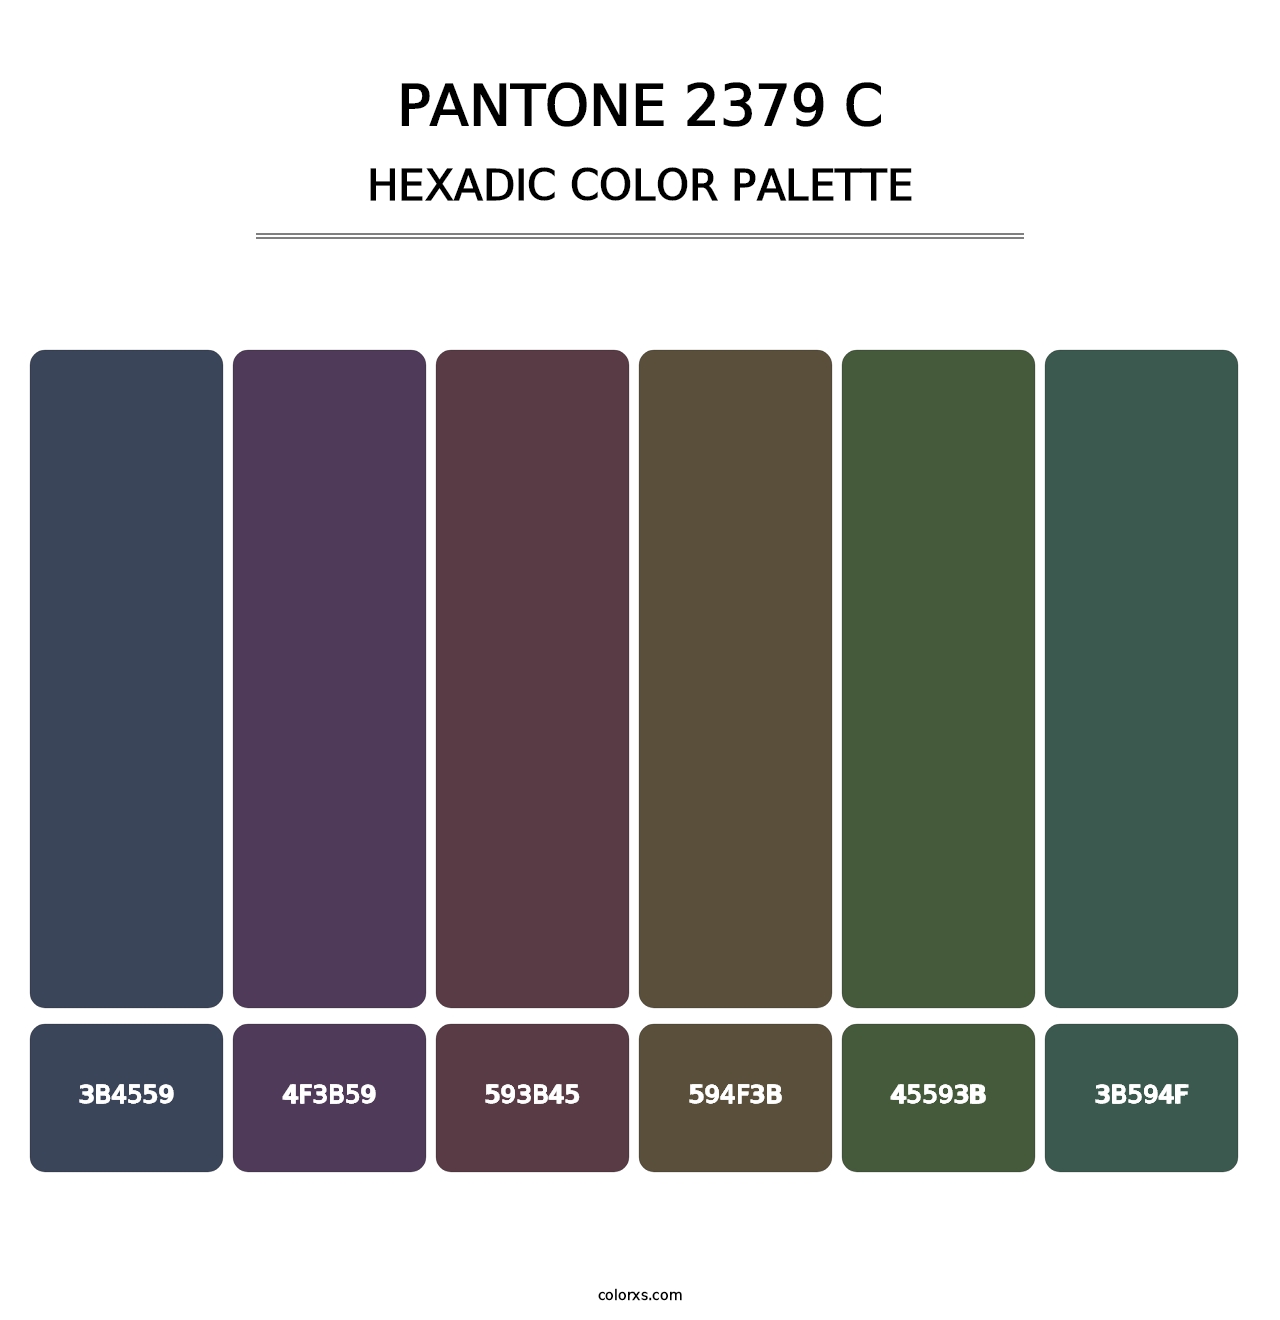 PANTONE 2379 C - Hexadic Color Palette